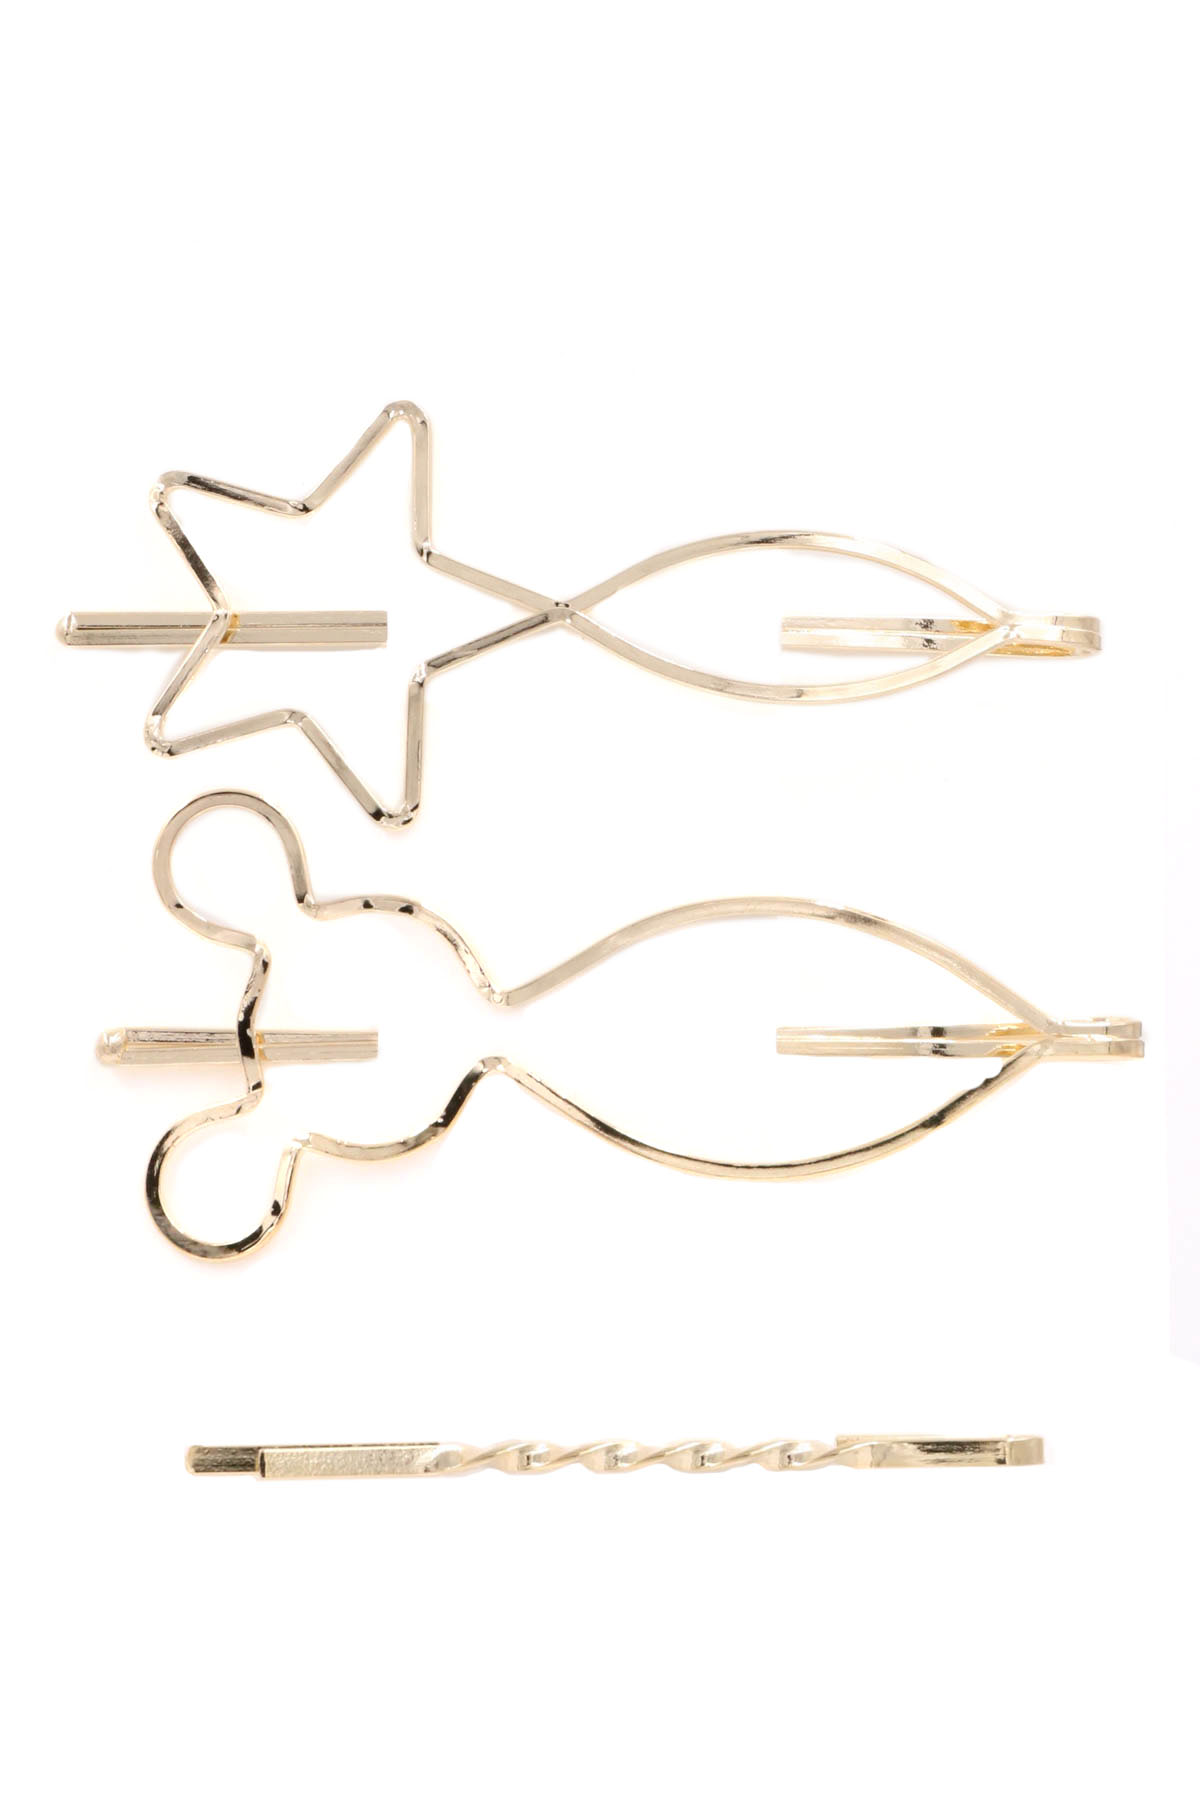 GOLD Brass Metal Pin Set - Hair Accessories